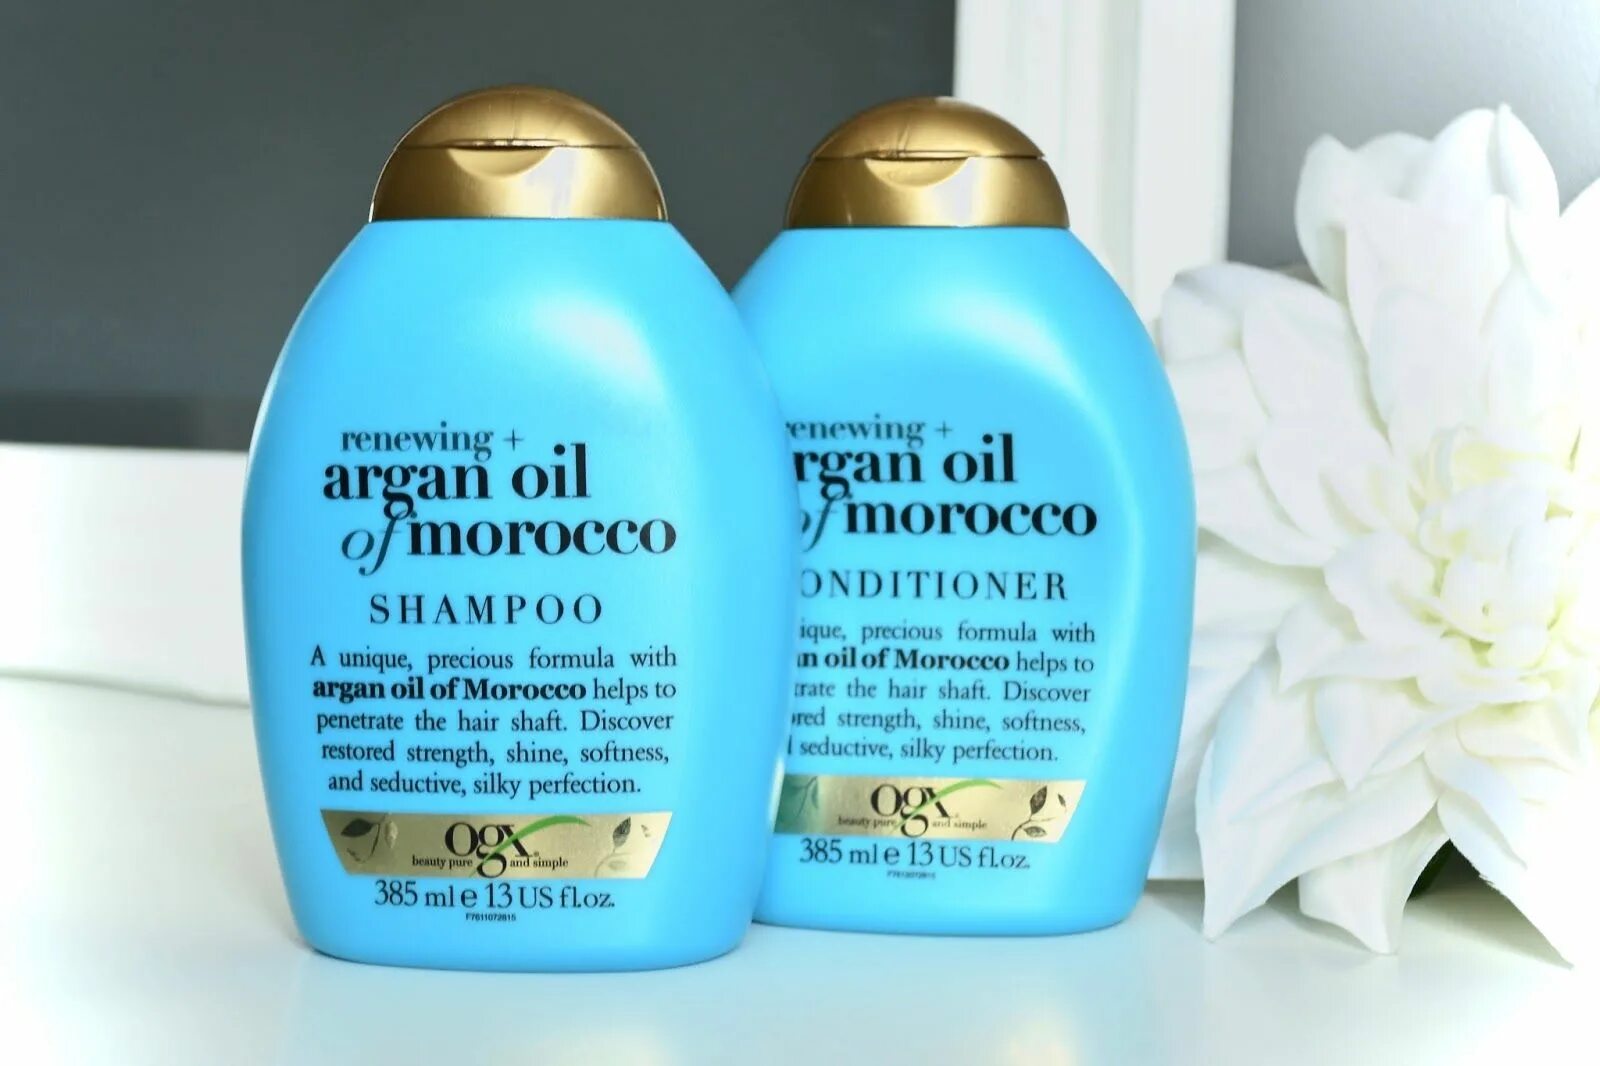 Шампунь OGX Argan Oil. Шампунь OGX Argan Oil of Morocco. Shampoo OGX шампунь "Argan Oil of Marocco Renewing+". OGX Moroccan Argan Oil.